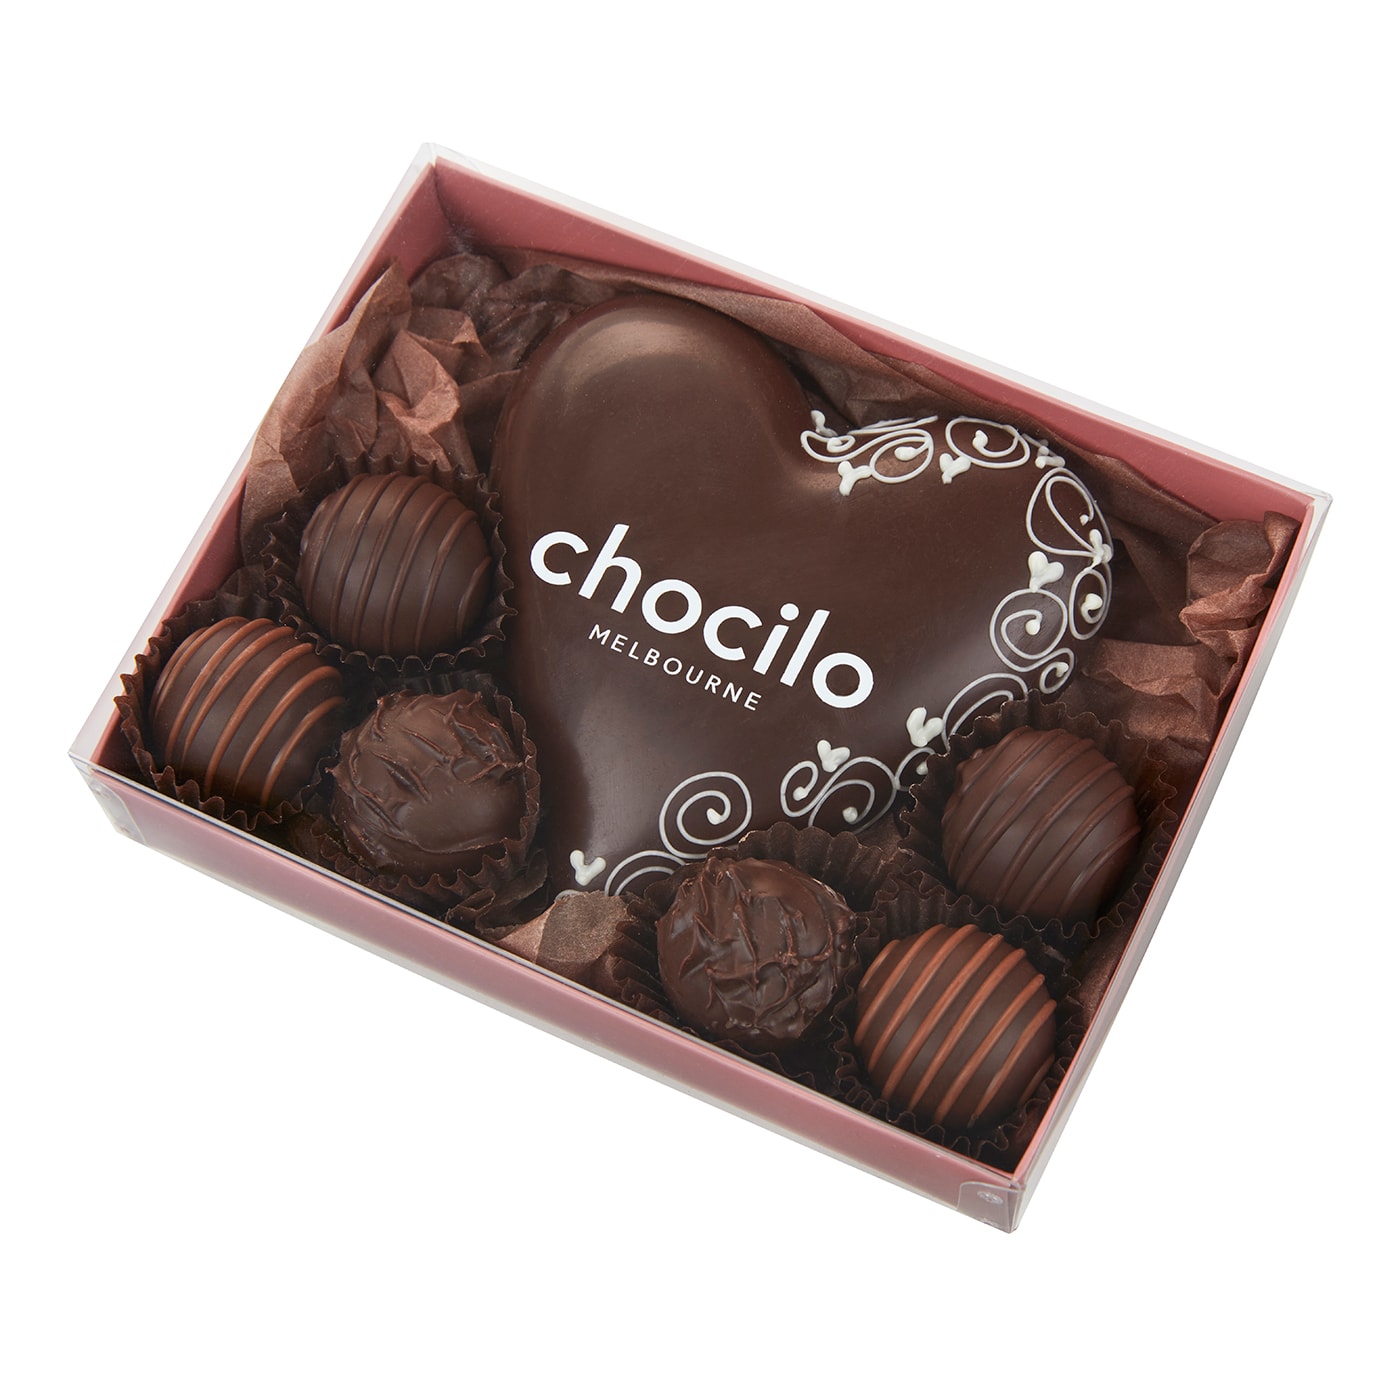 Chocilo Melbourne Dark Chocolate Heart with Assorted Dark Chocolate Truffles Gift Box.